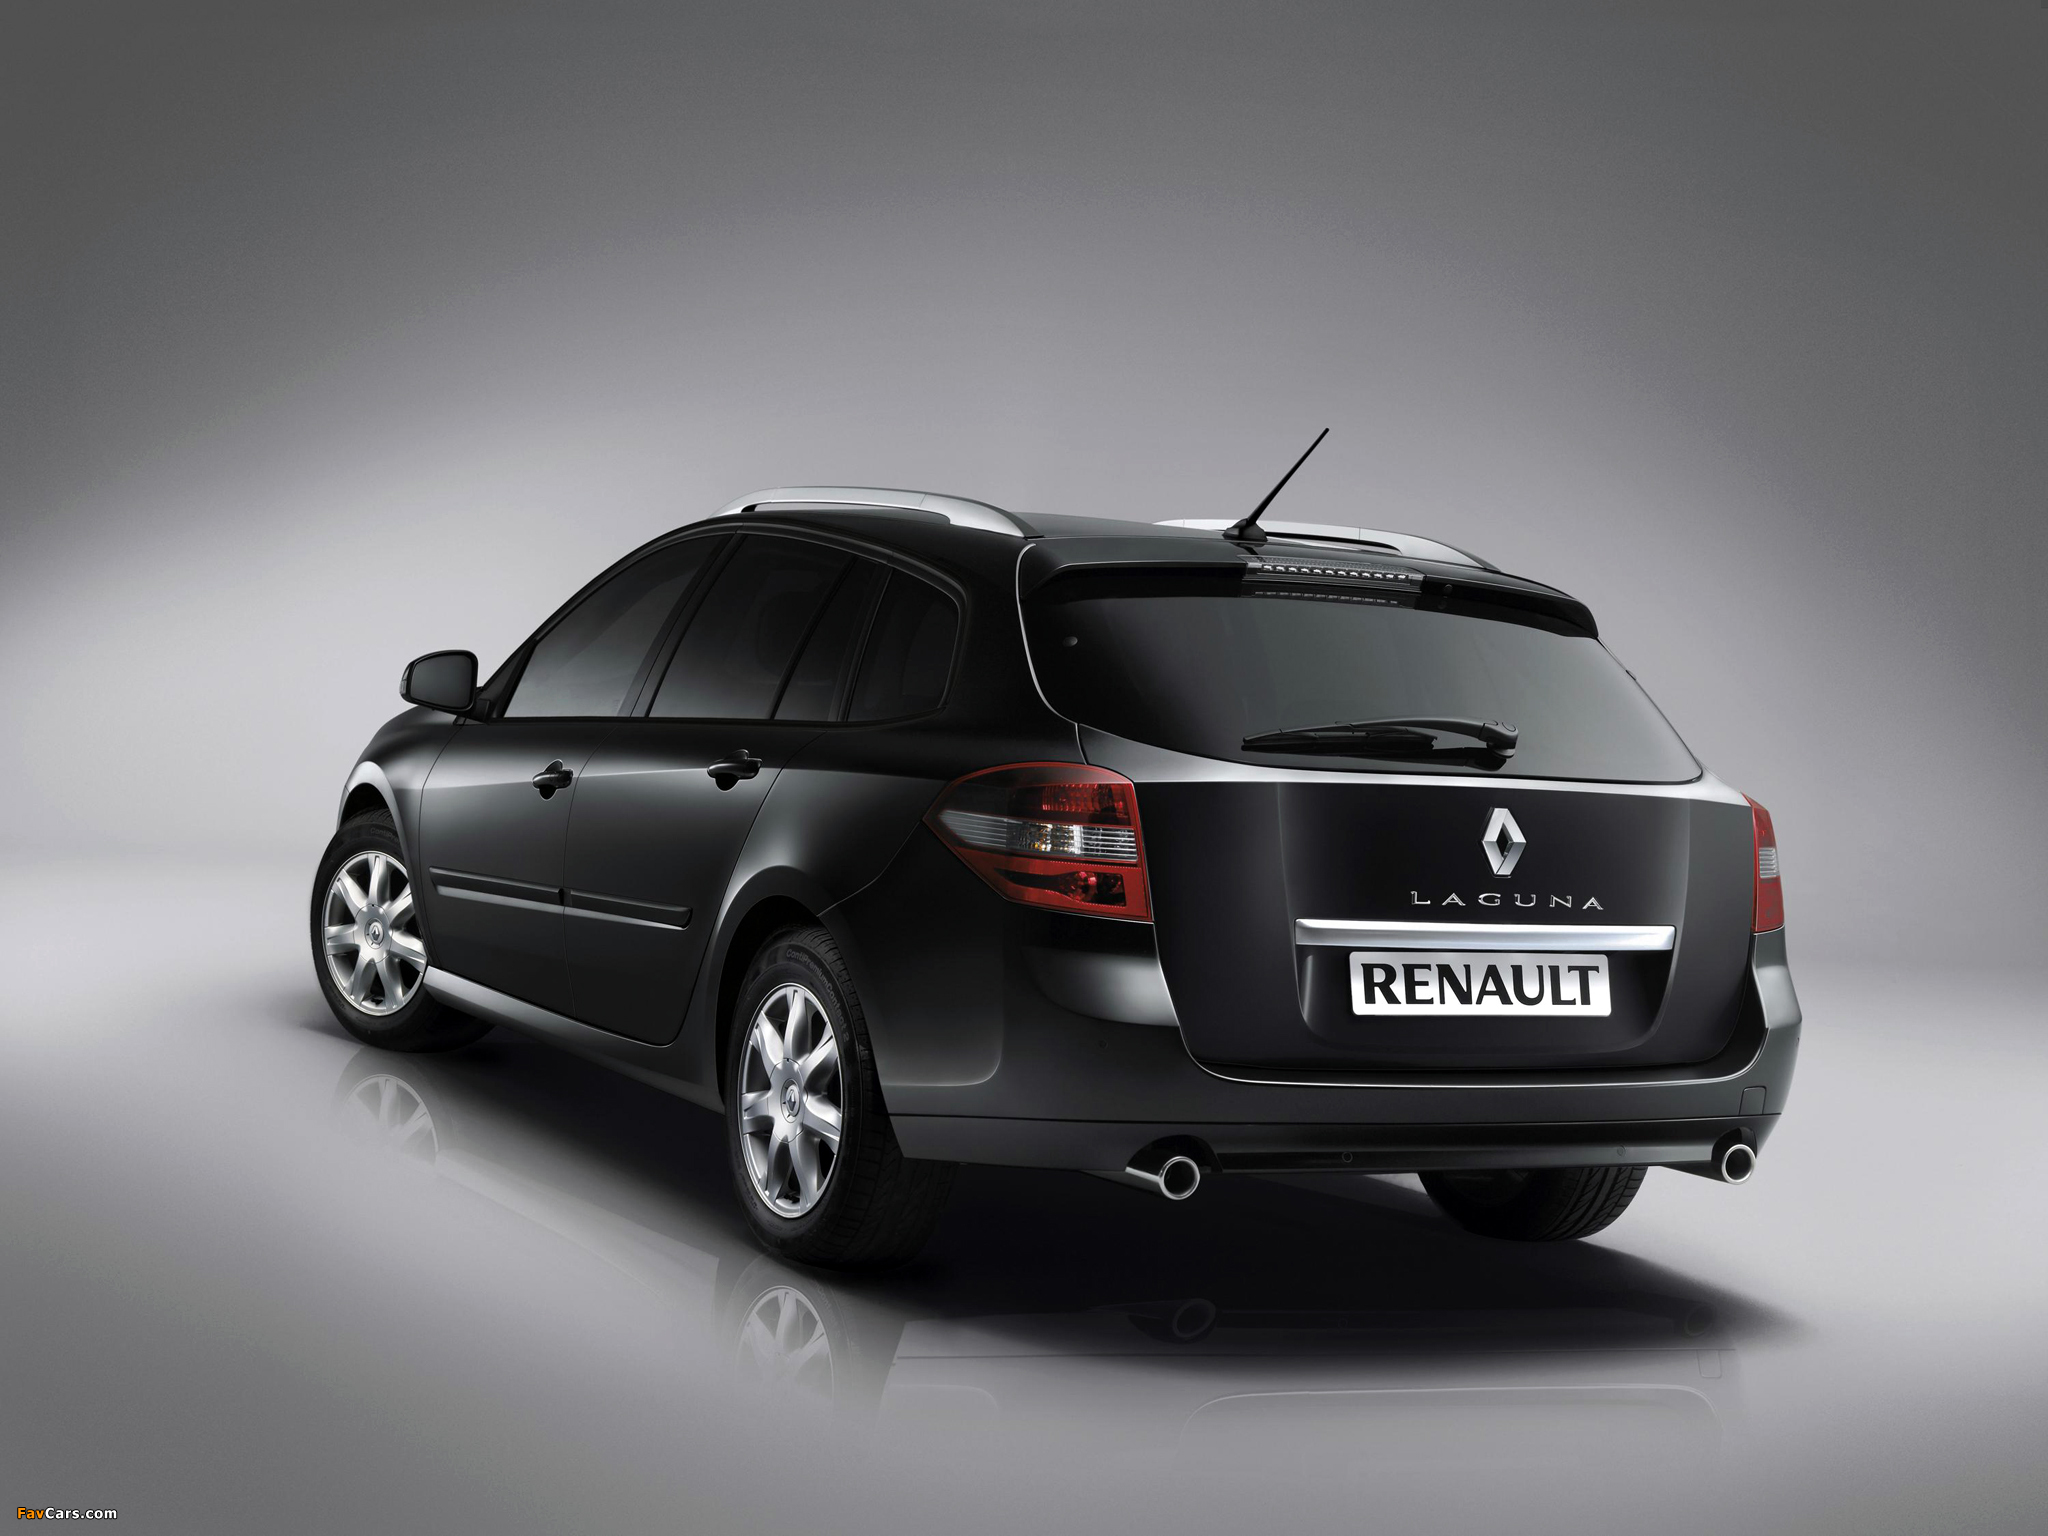 Renault Laguna Grandtour Black Edition 2009 photos (2048 x 1536)